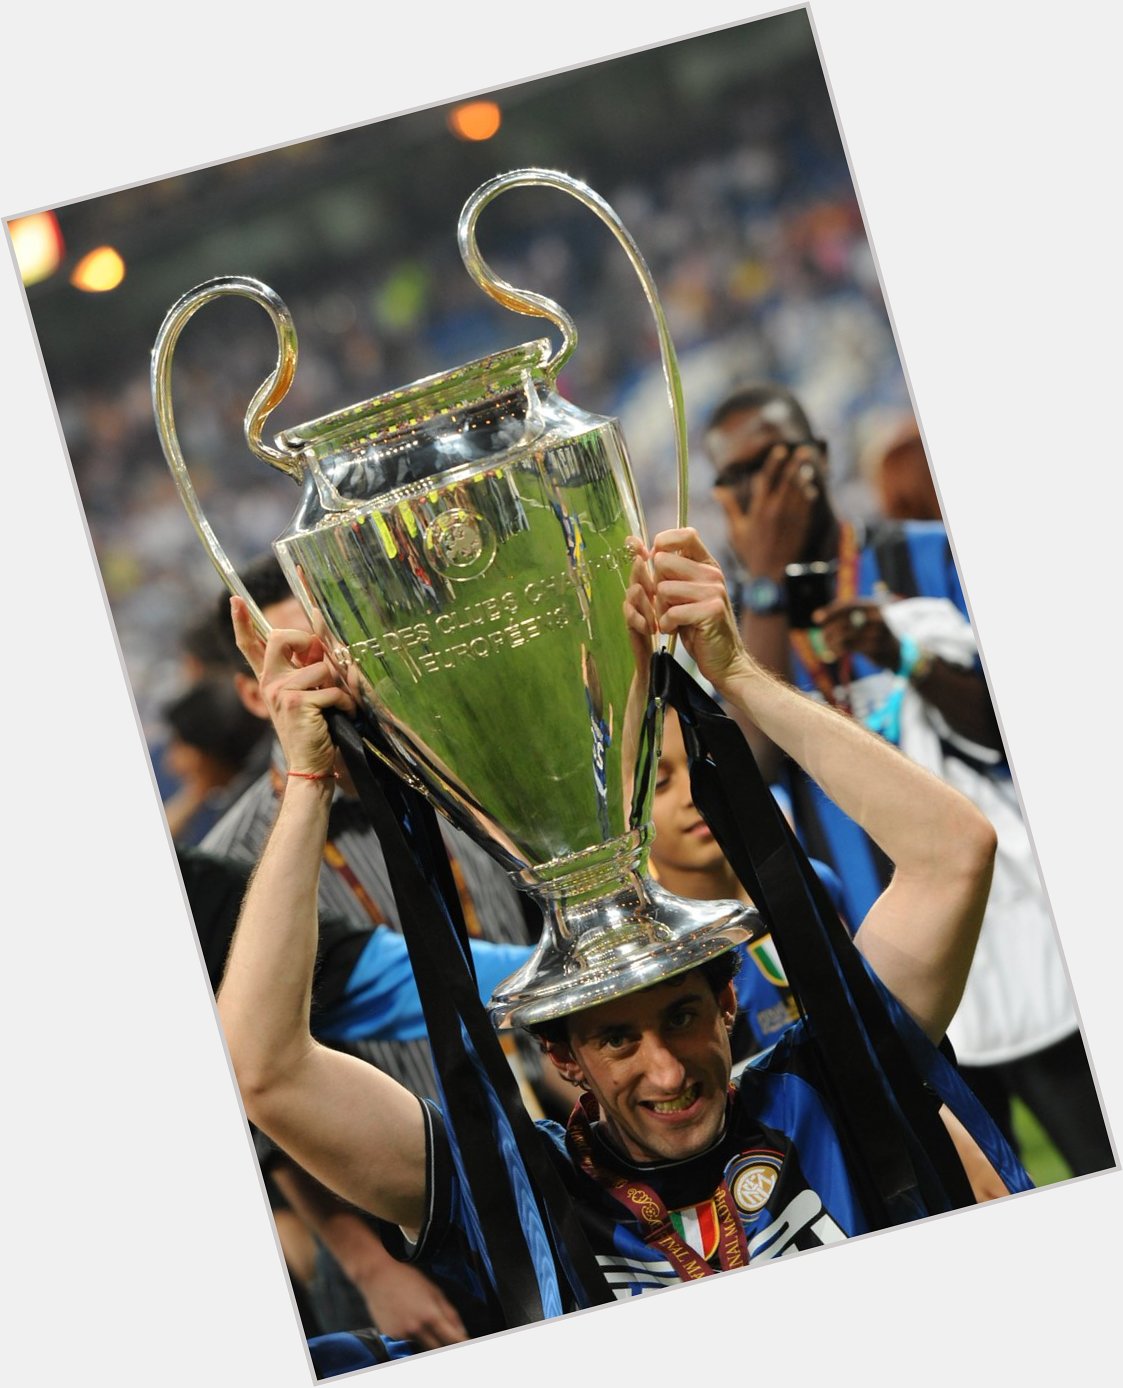  in 1979, an Inter legend was born...

Wish 2010 winner Diego Milito a happy birthday!   